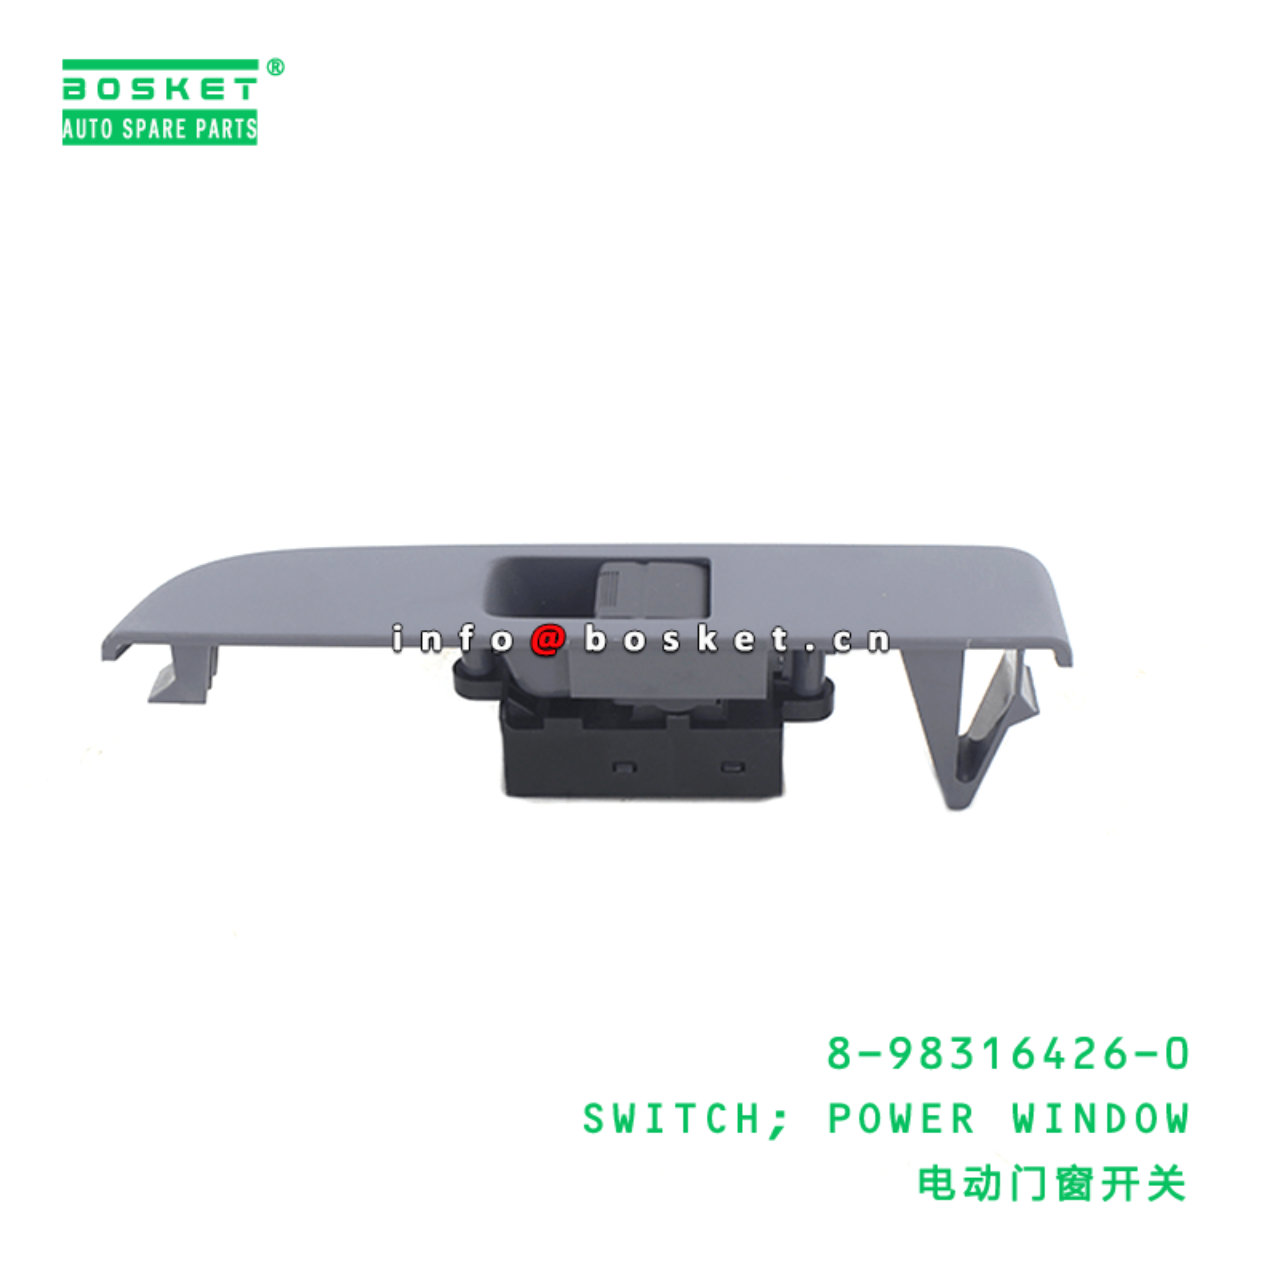  8-98316426-0 Power Window Switch 8983164260 Suitable for ISUZU NHR